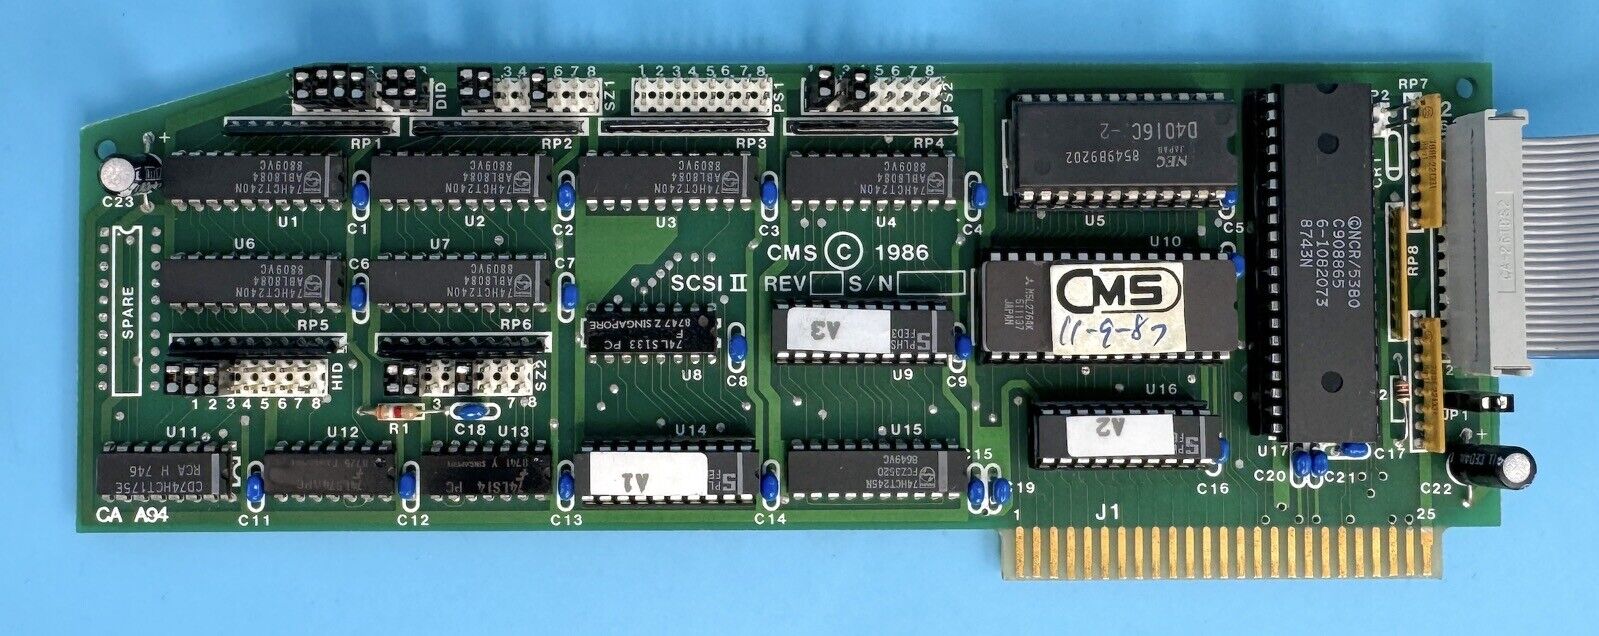 CMS SCSI II Interface Card for Apple IIe & IIGS Computers – Working